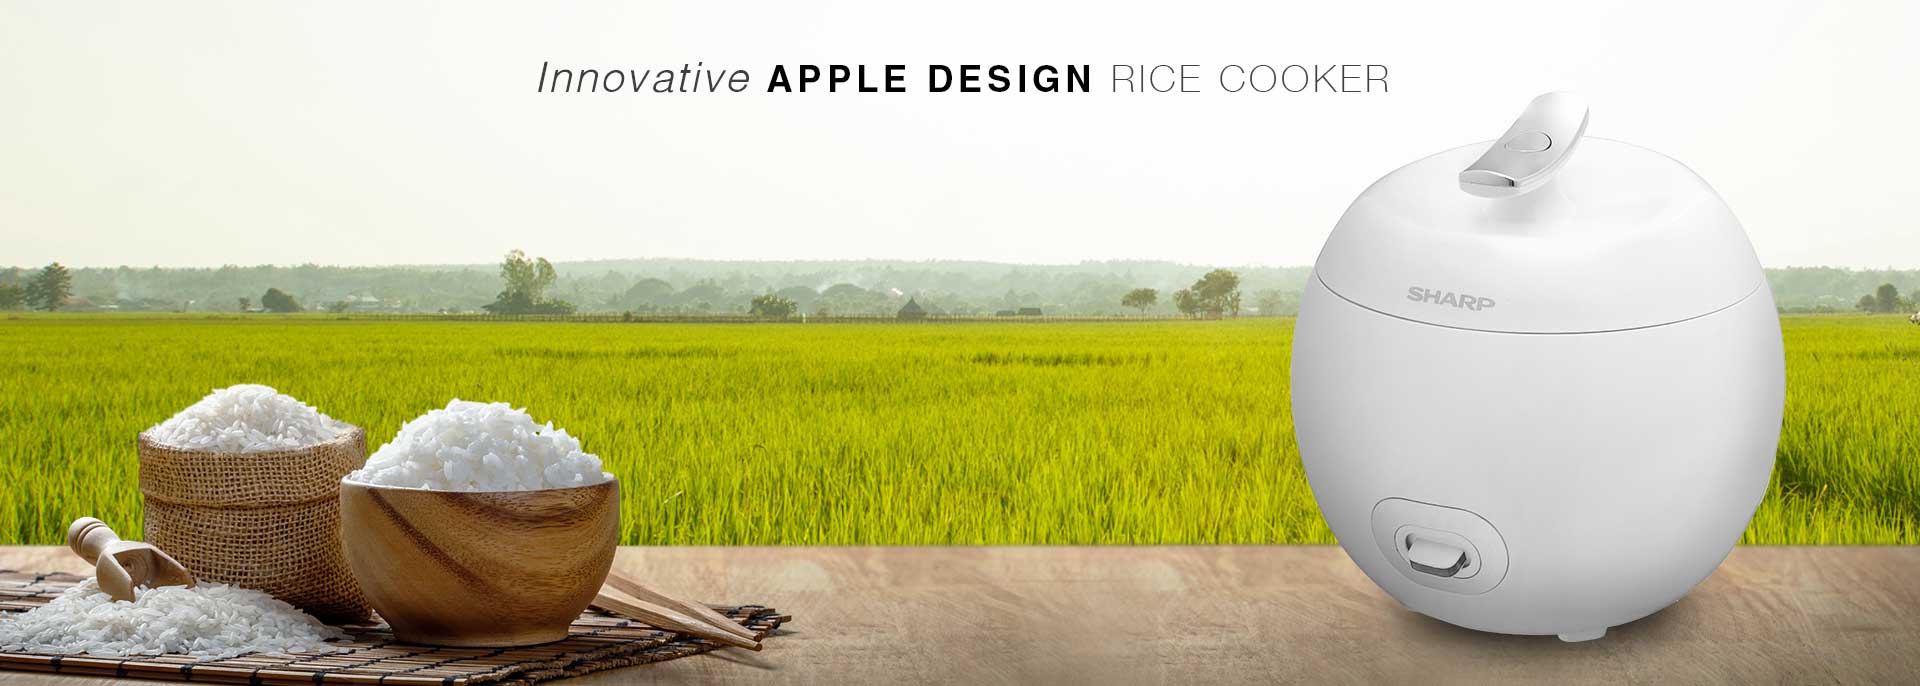 Innovative apple design rice cooker - SHARP Indonesia